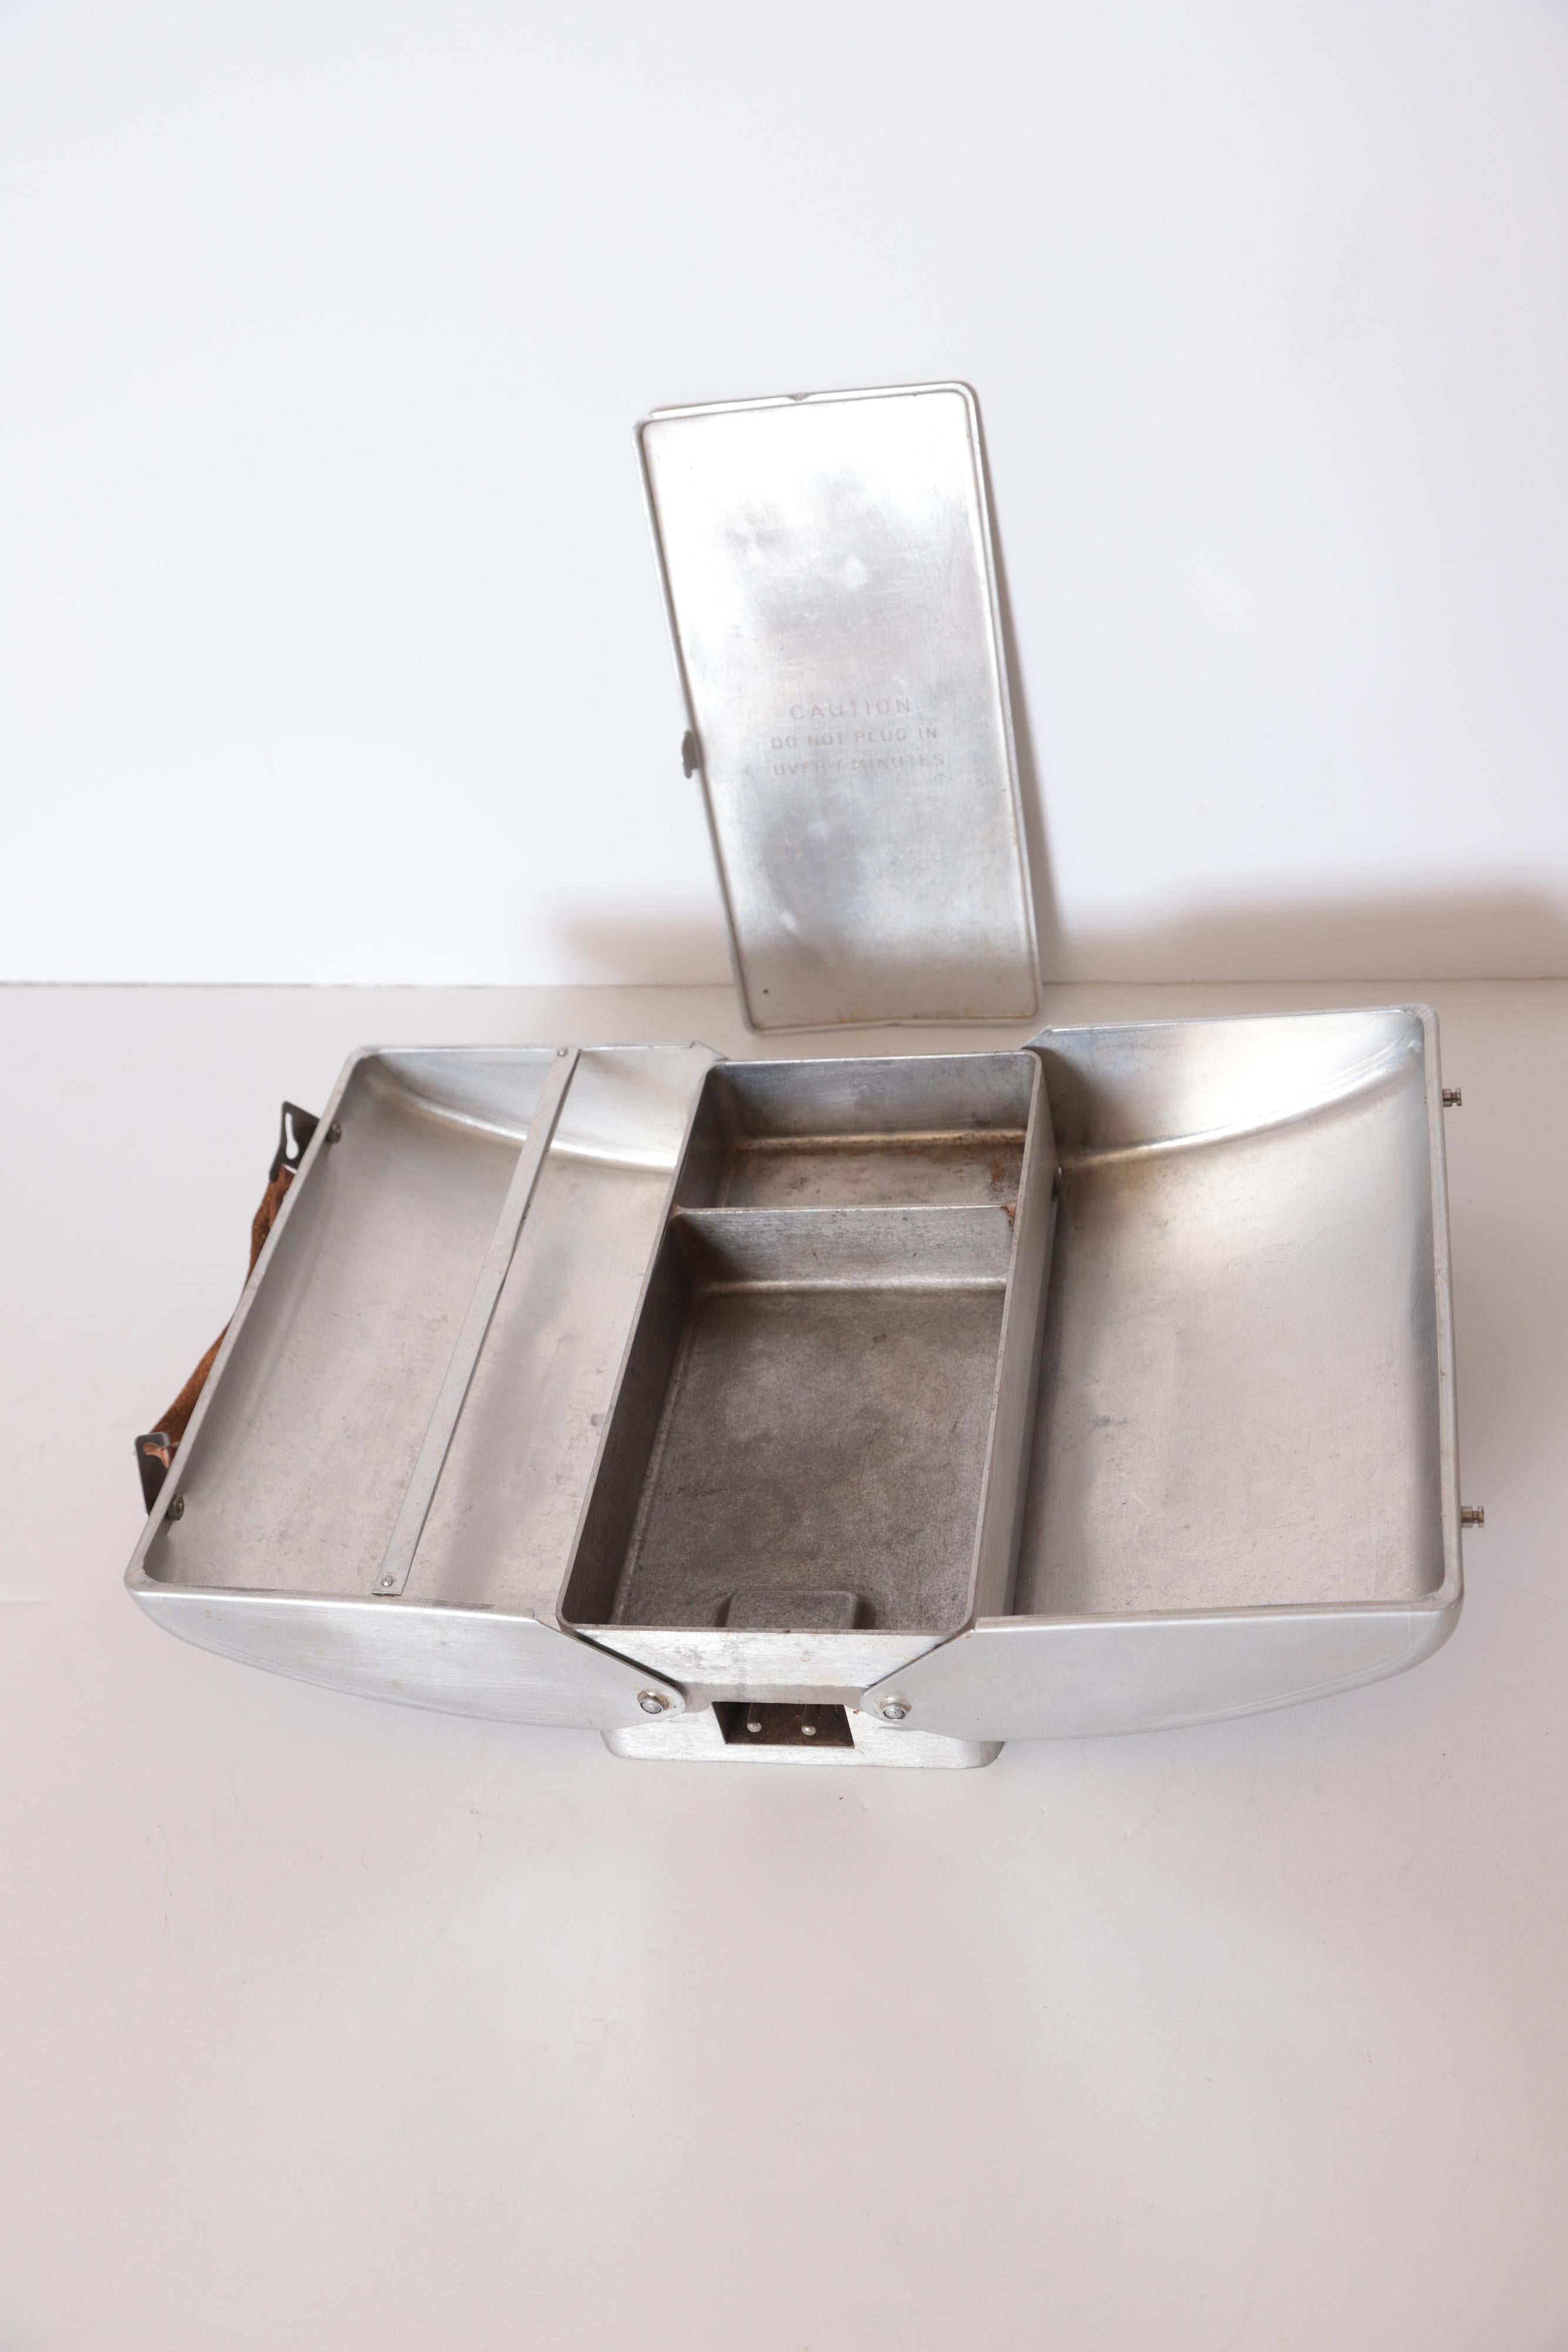 Art Deco Machine Age Industrial Design Thermette Hot Lunch Box by Privett Mfg. 1